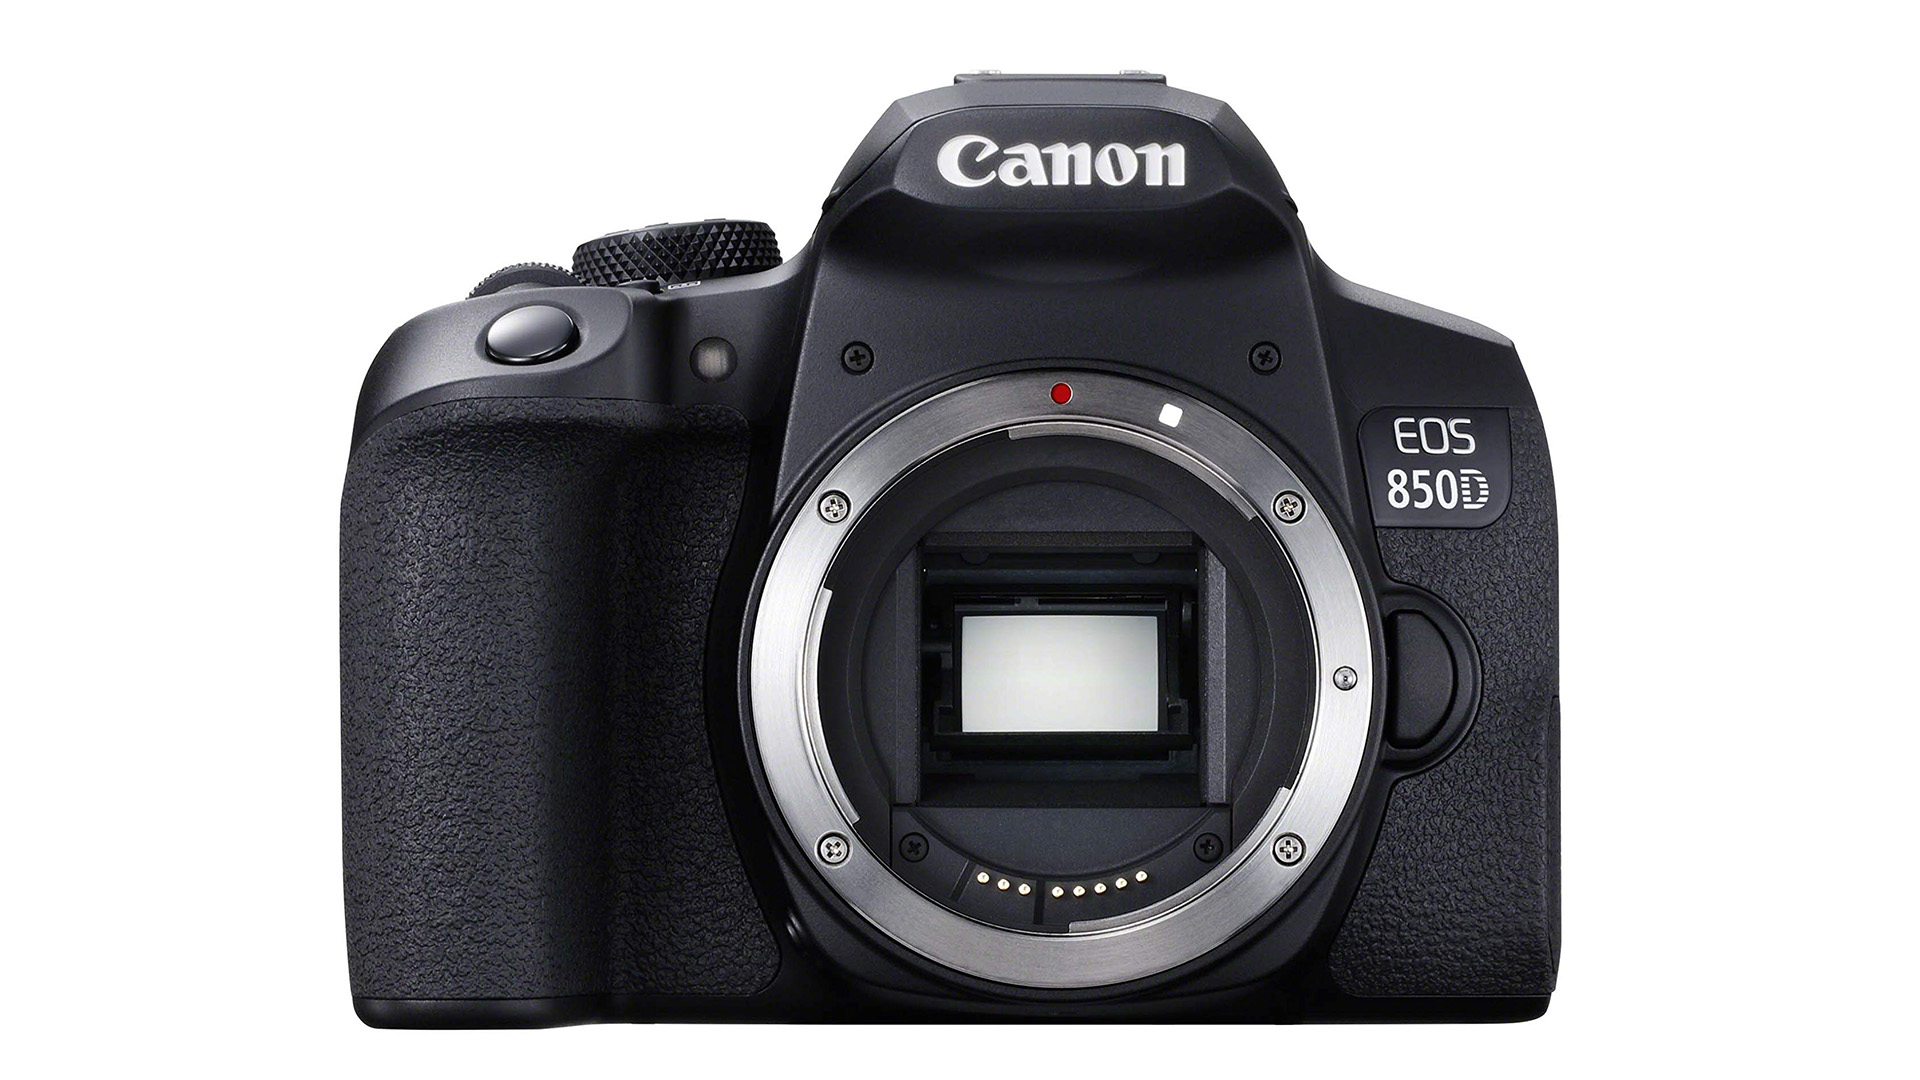 The EOS 850D camera body